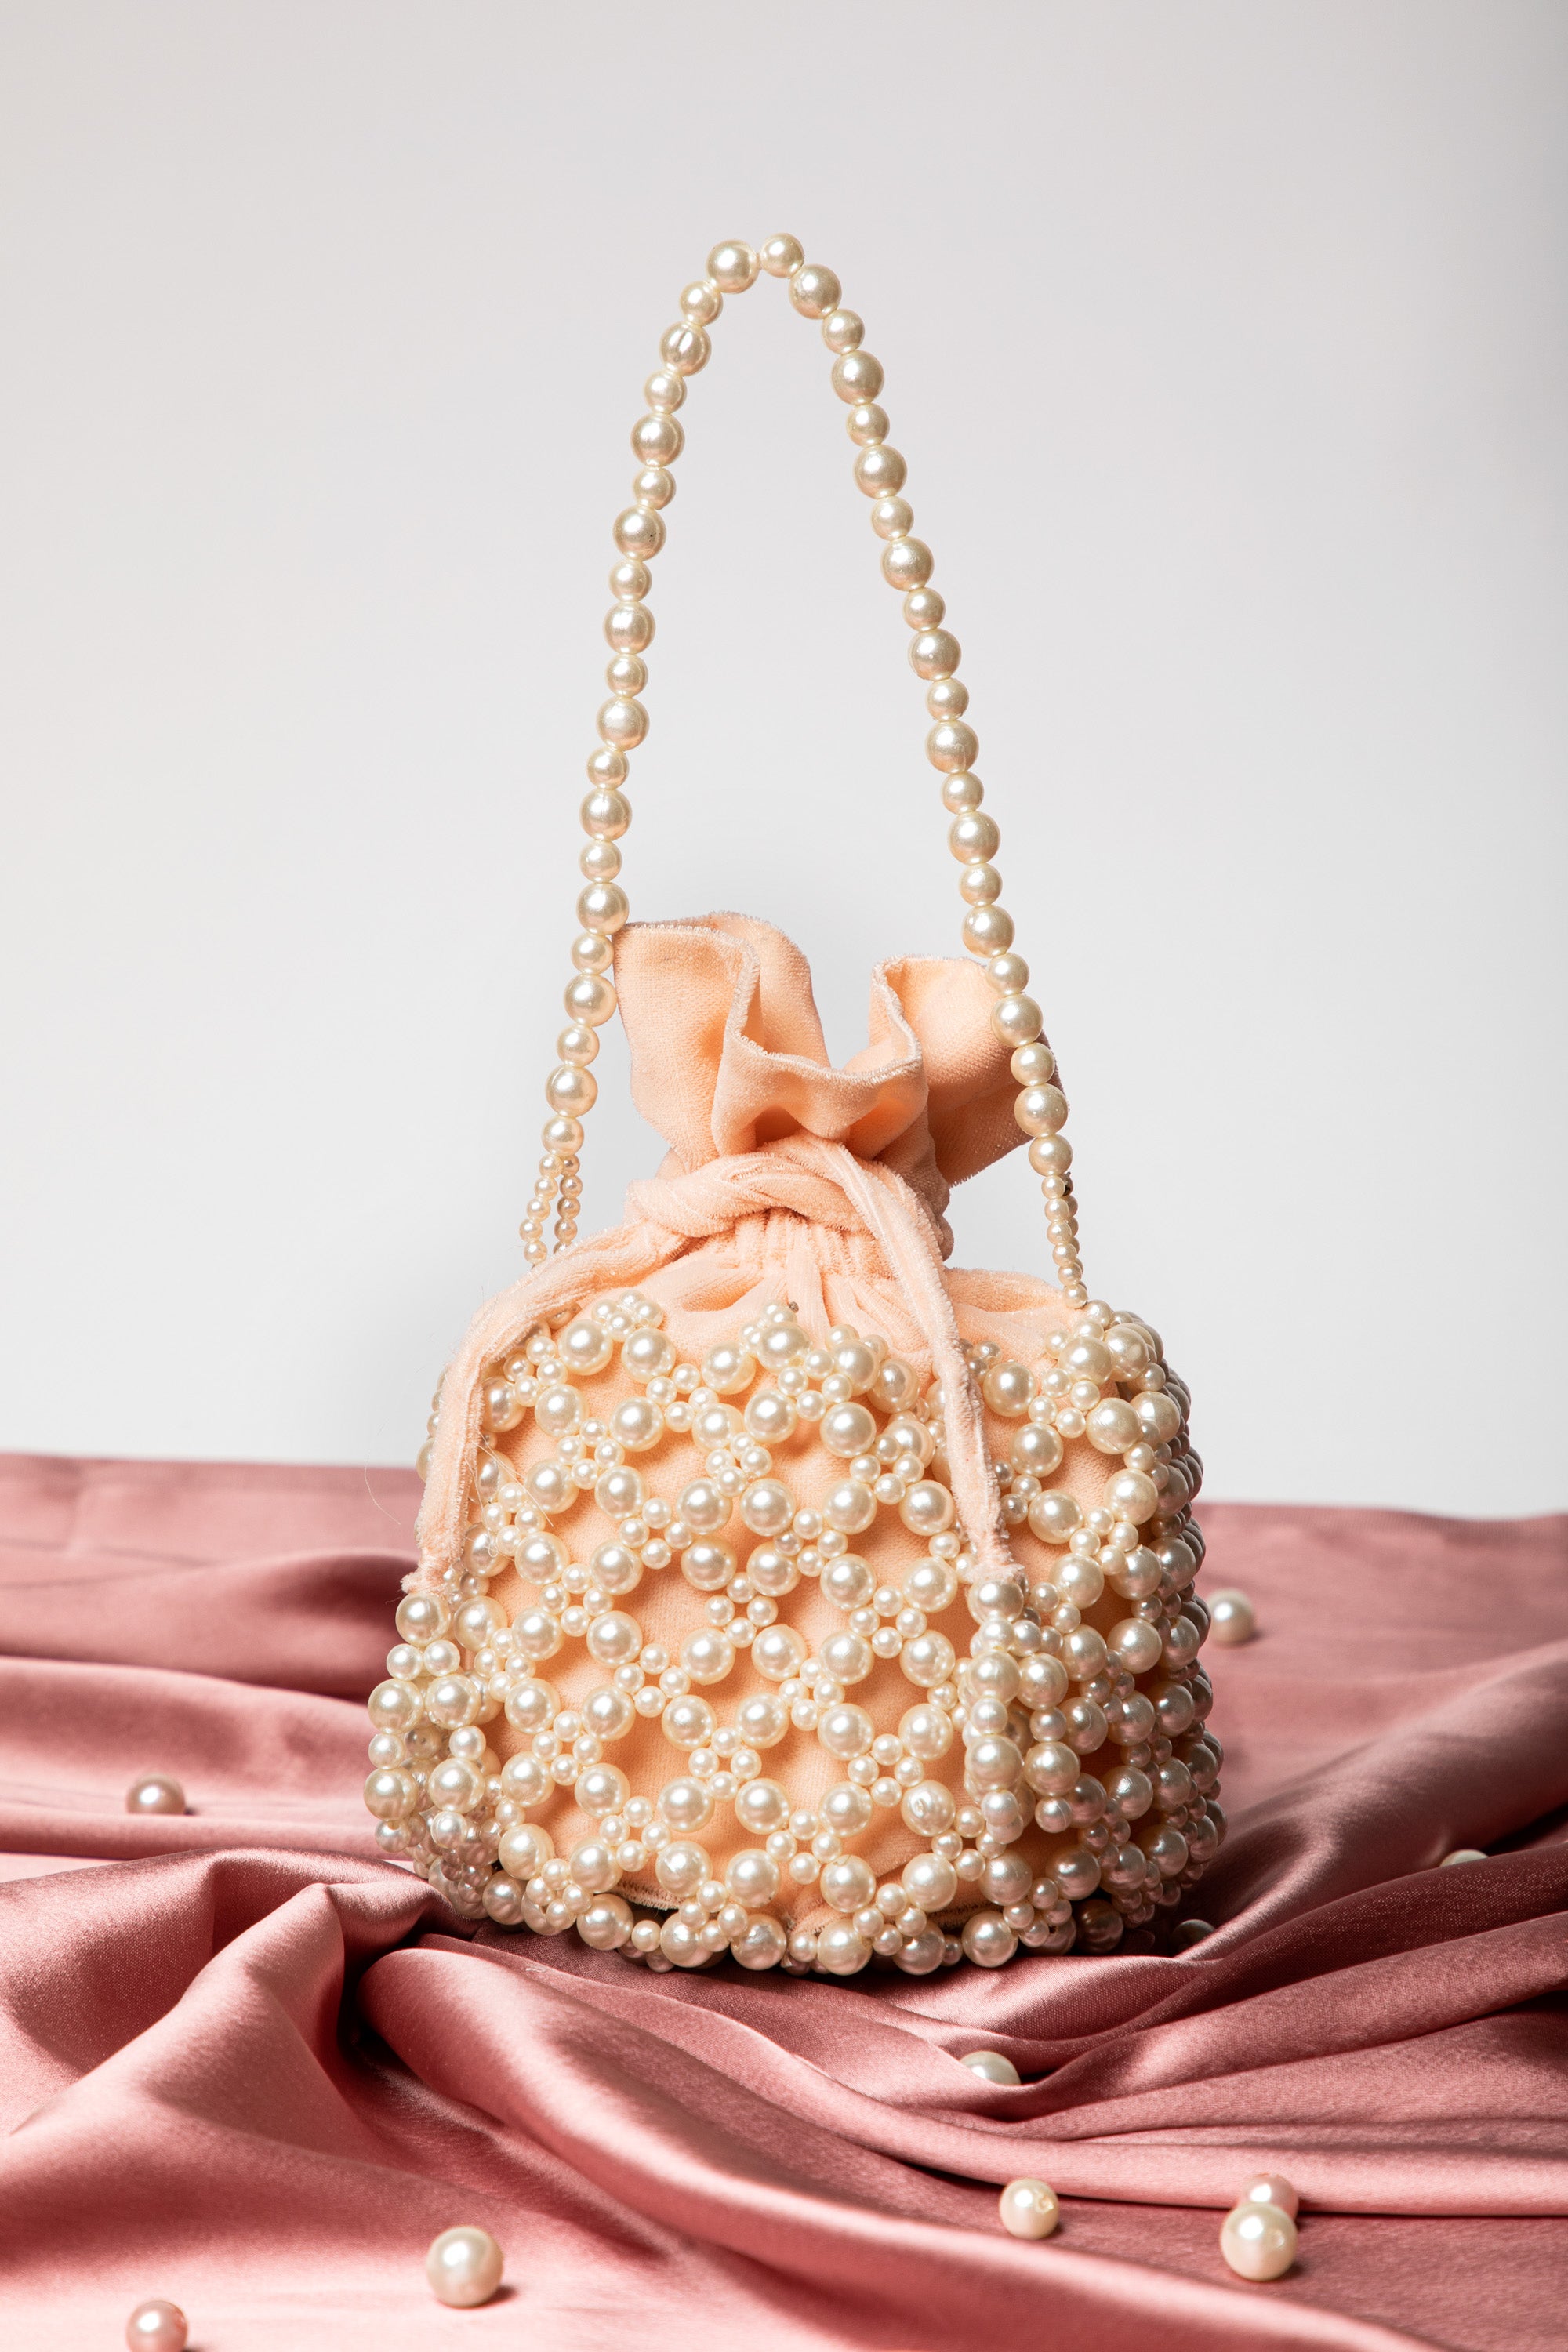 Designer Handbags For Women On Sale | The RealReal